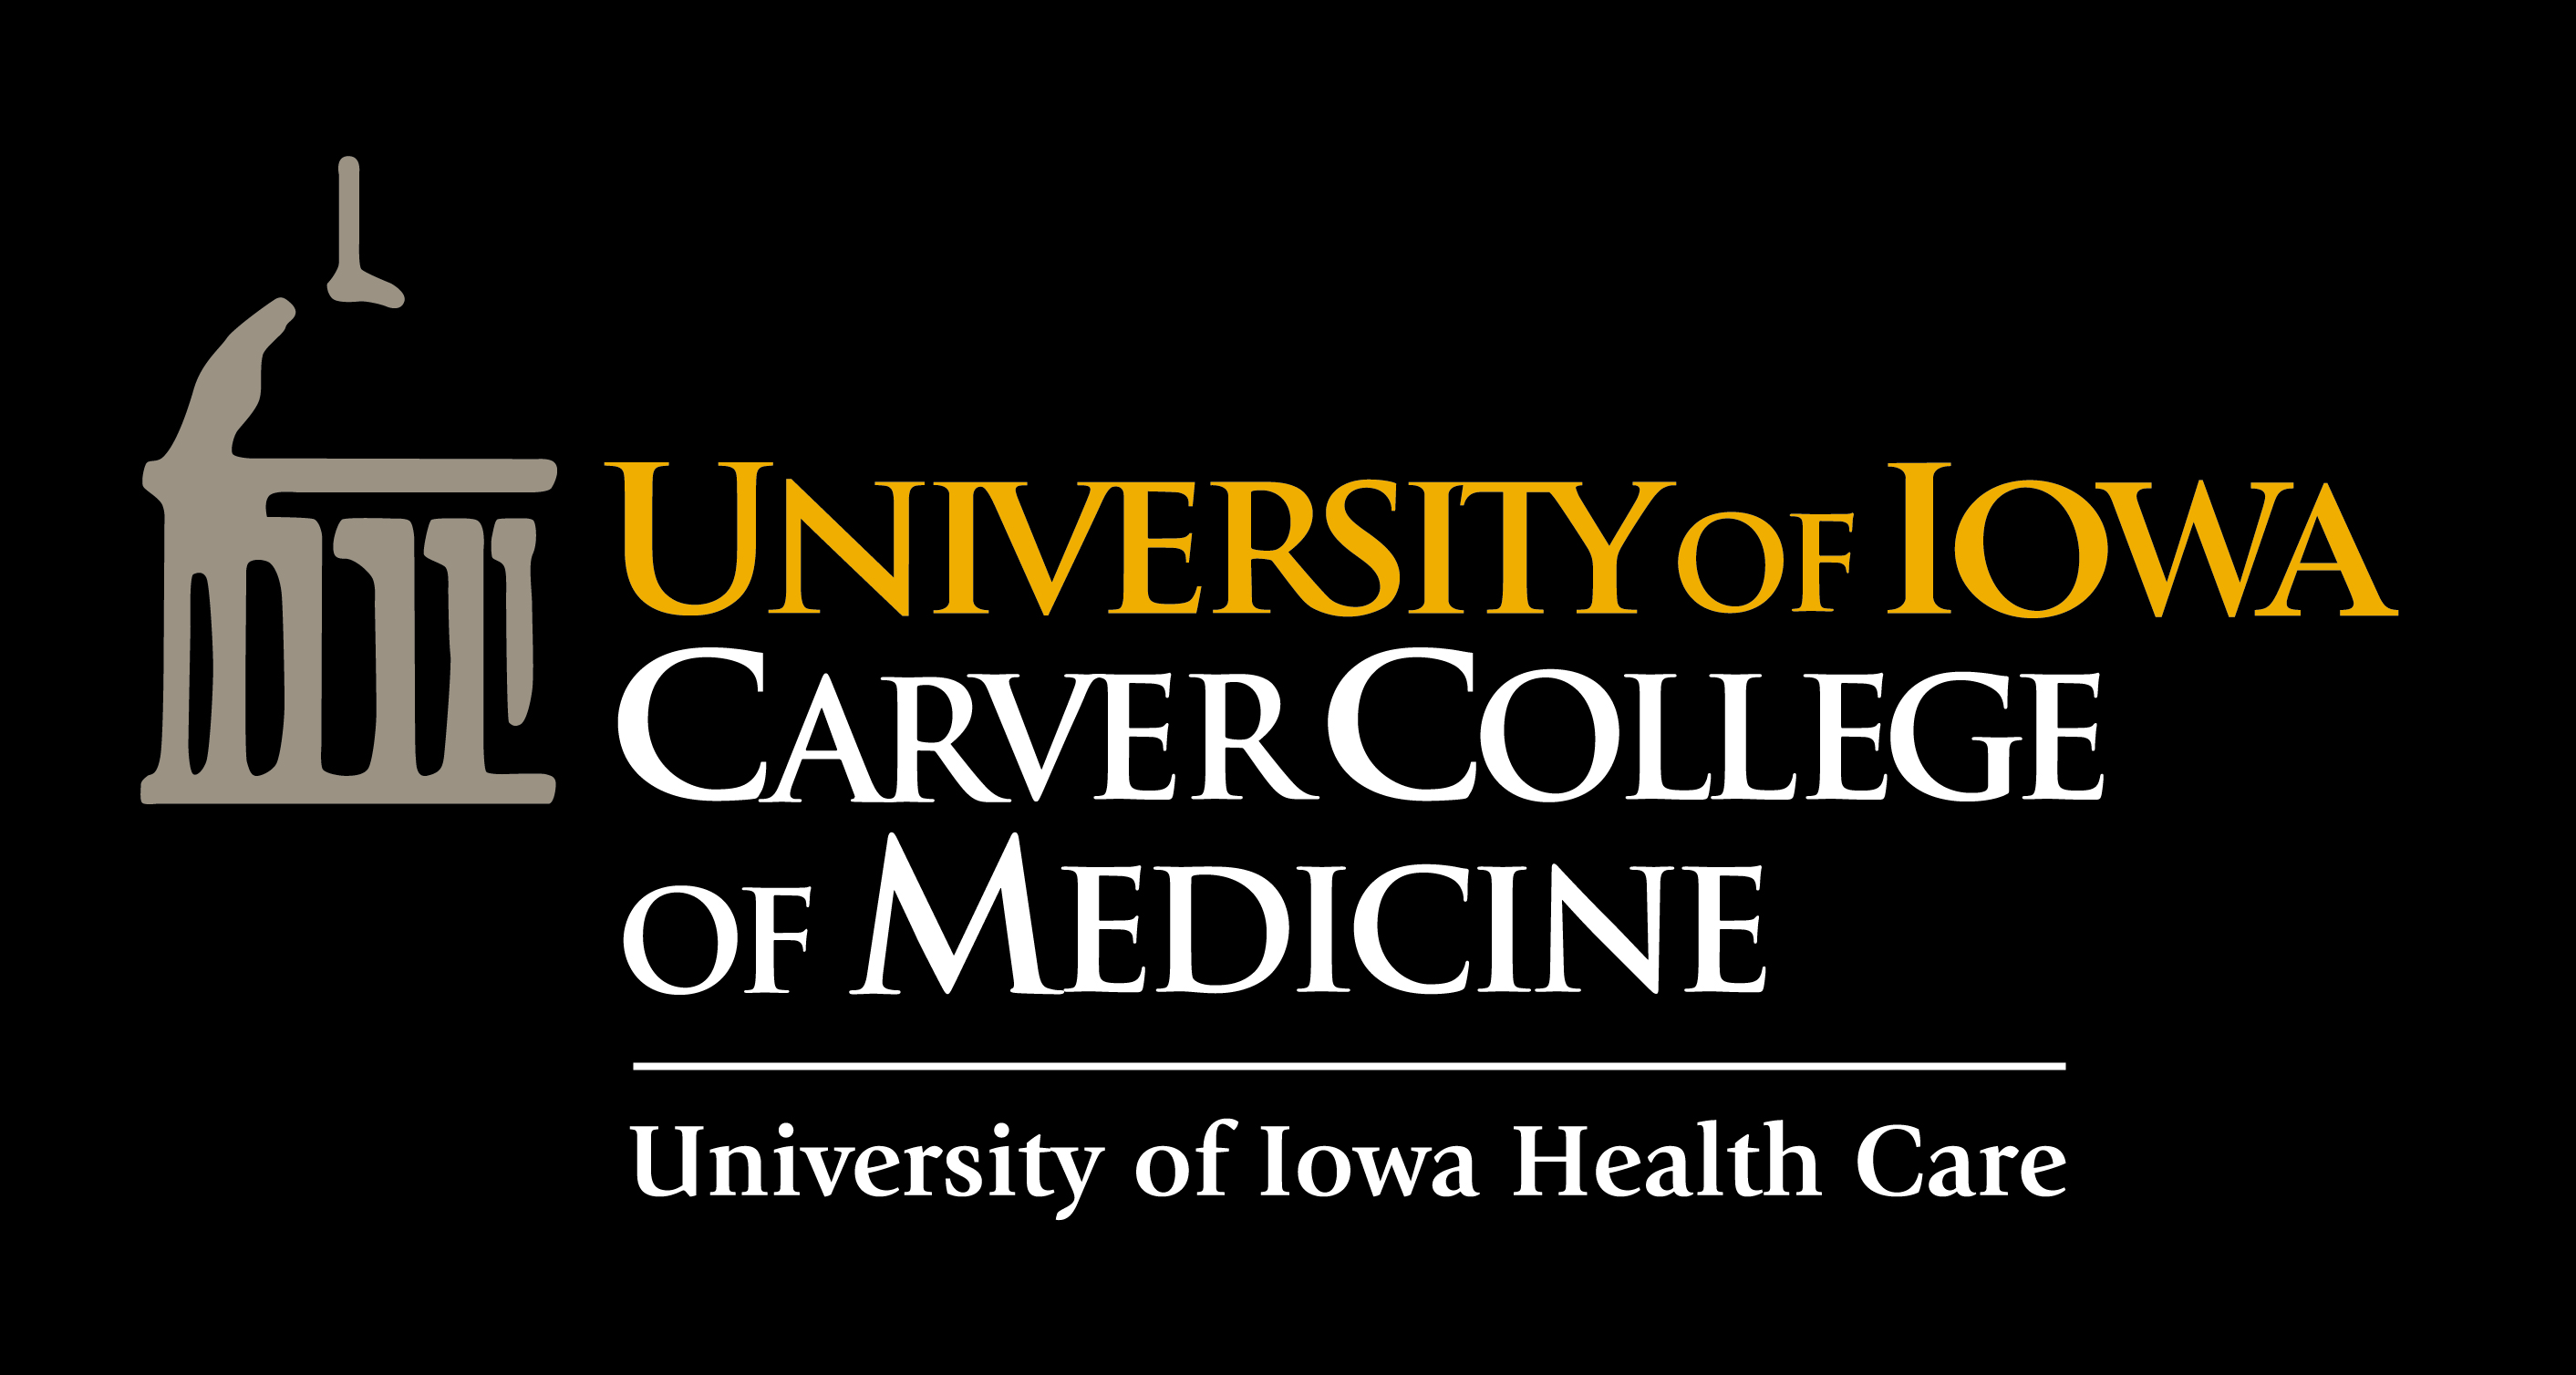 Carver College of Medicine